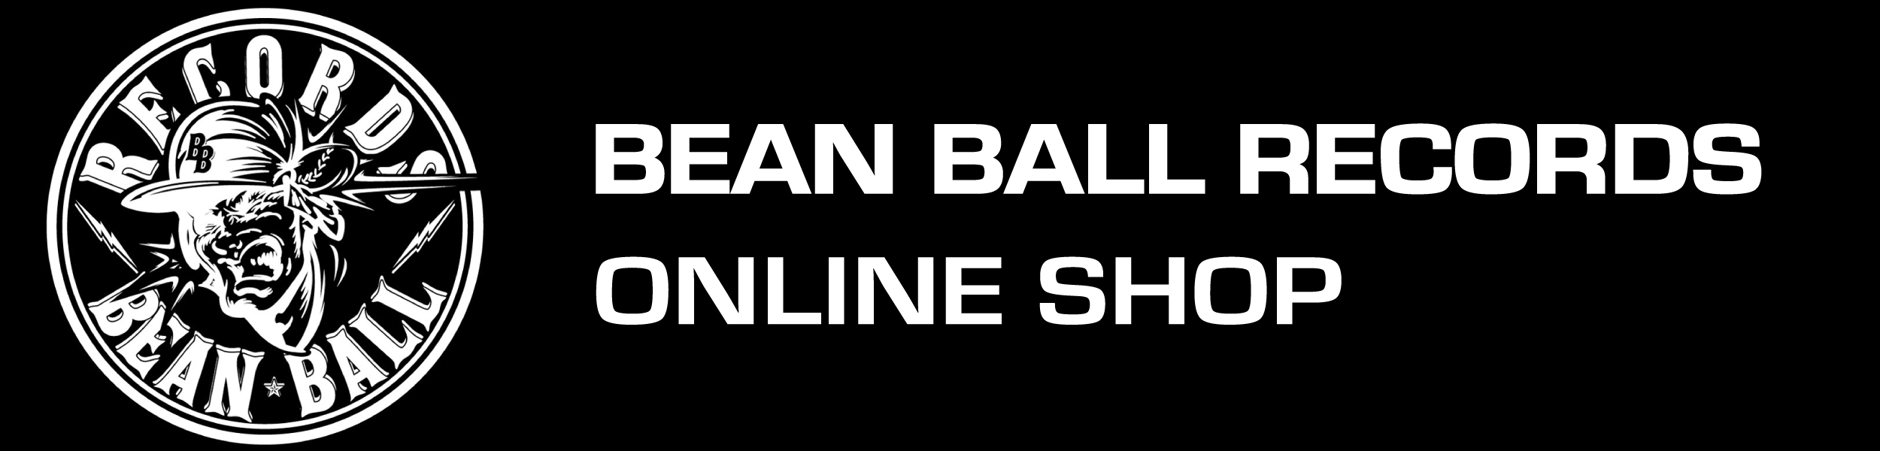 BEAN BALL RECORDS ONLINE SHOP